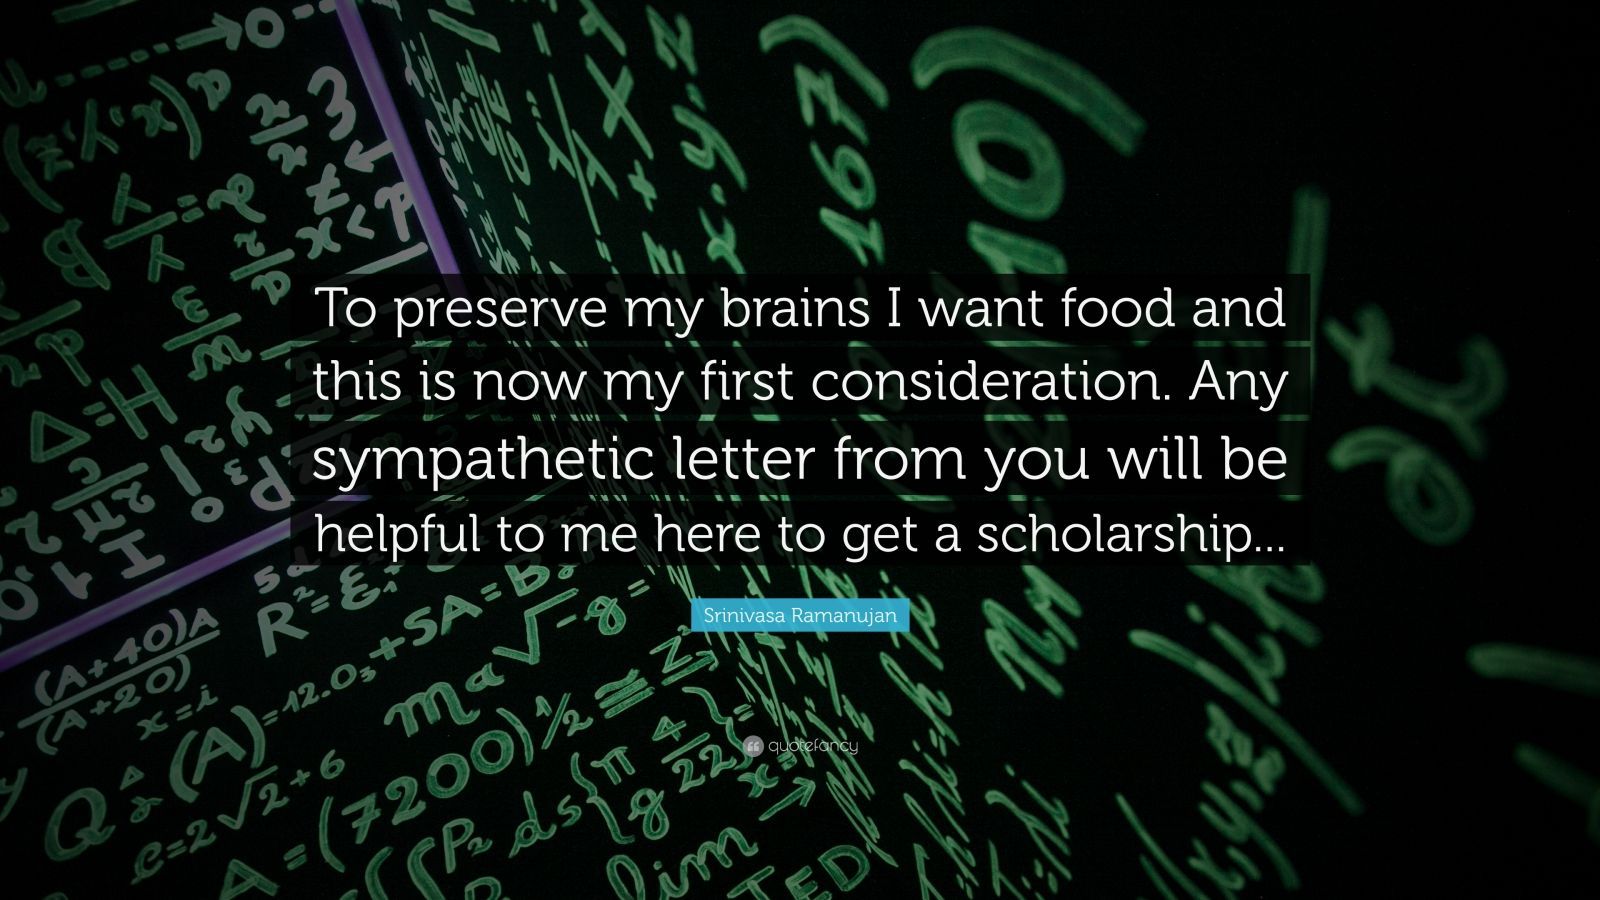 Srinivasa Ramanujan Quote: “To preserve my brains I want food